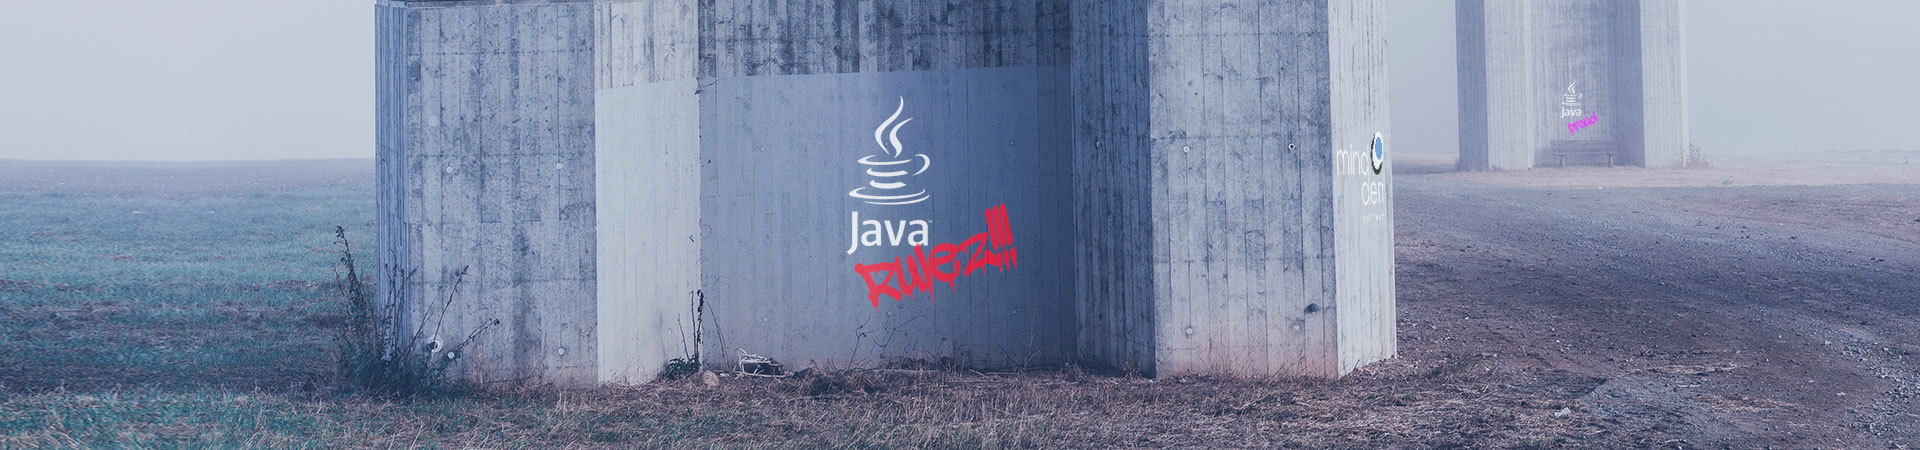 Senior Java developer, no diga JAVA, diga moldeable y sólido